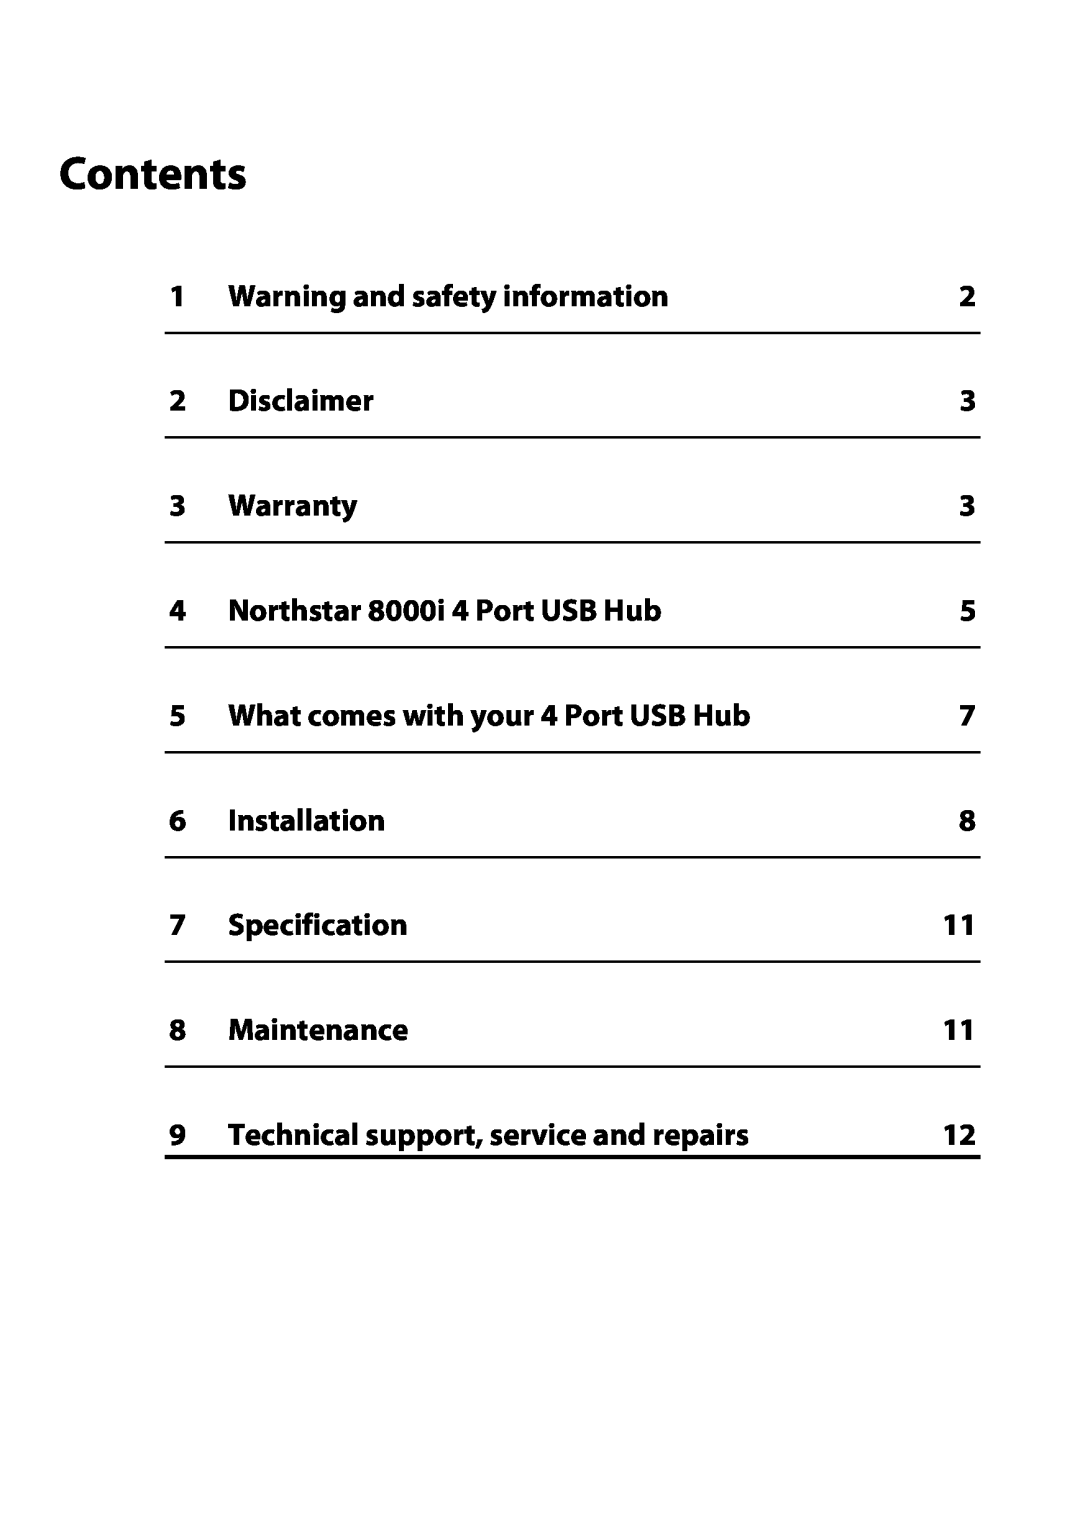 North Star Contents, Warning and safety information, Disclaimer, Warranty, Northstar 8000i 4 Port USB Hub, Installation 